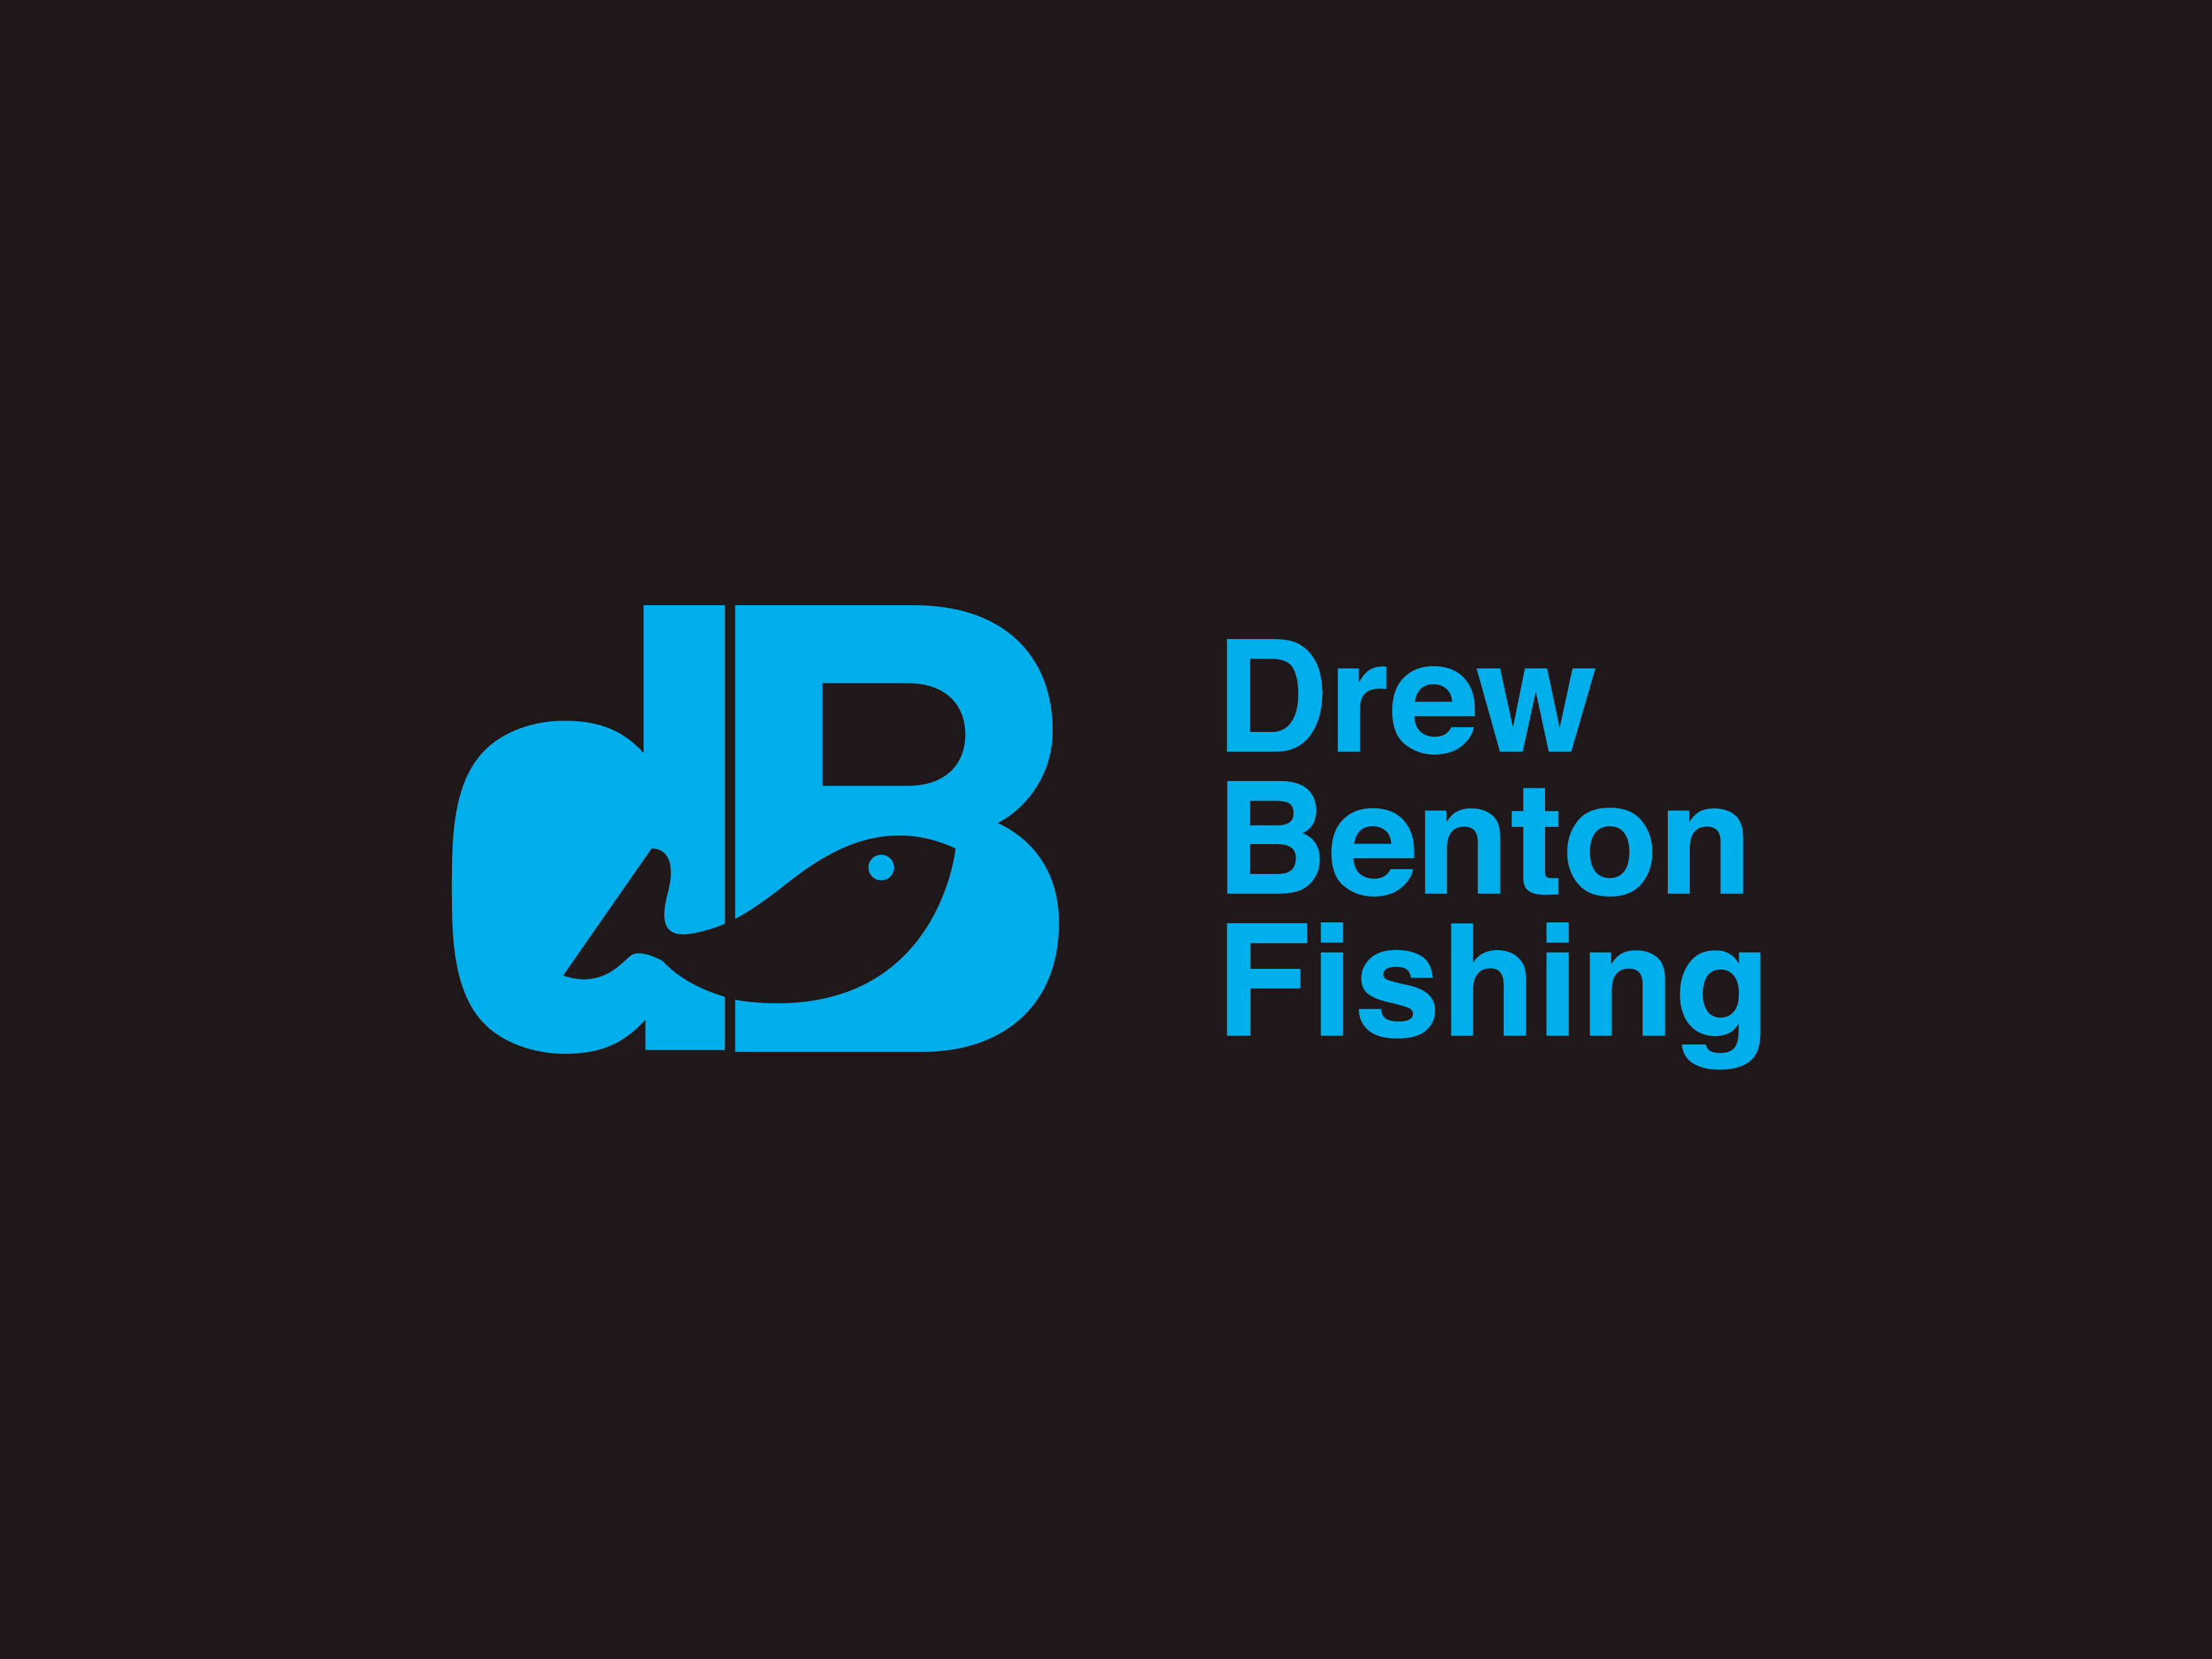 Logo Design entry 1069267 submitted by VIEaziz to the Logo Design for Drew Benton Fishing run by Drewbentonfishing